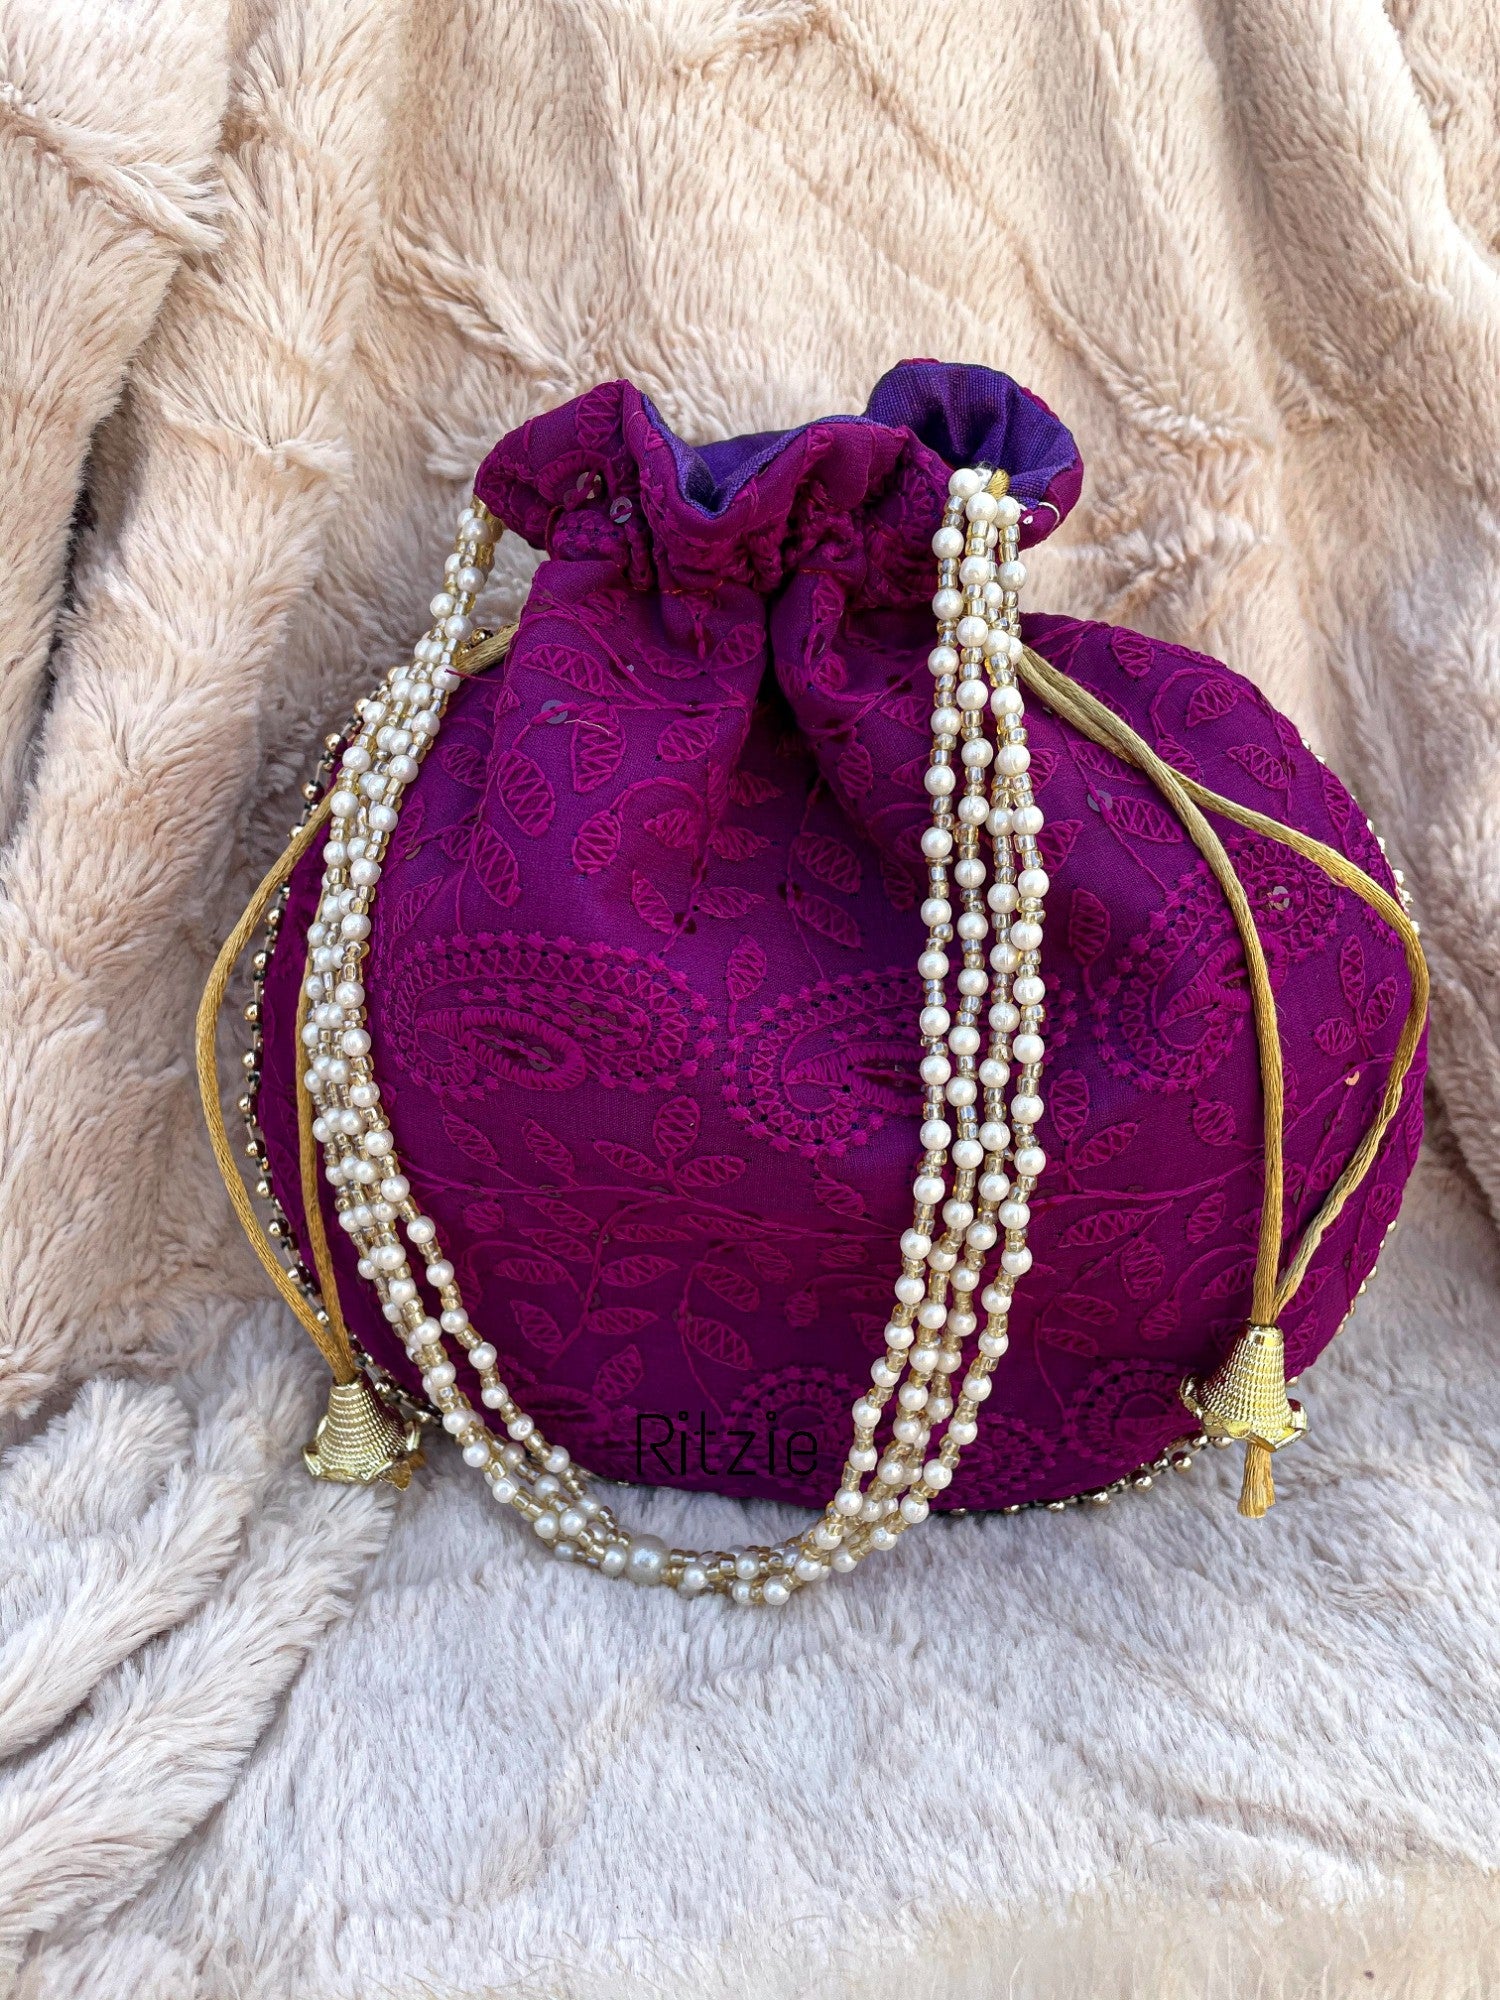 Women's Chickenkari Embroidered Crossbody Belt Sling Bag With Potli  Purple - Ritzie